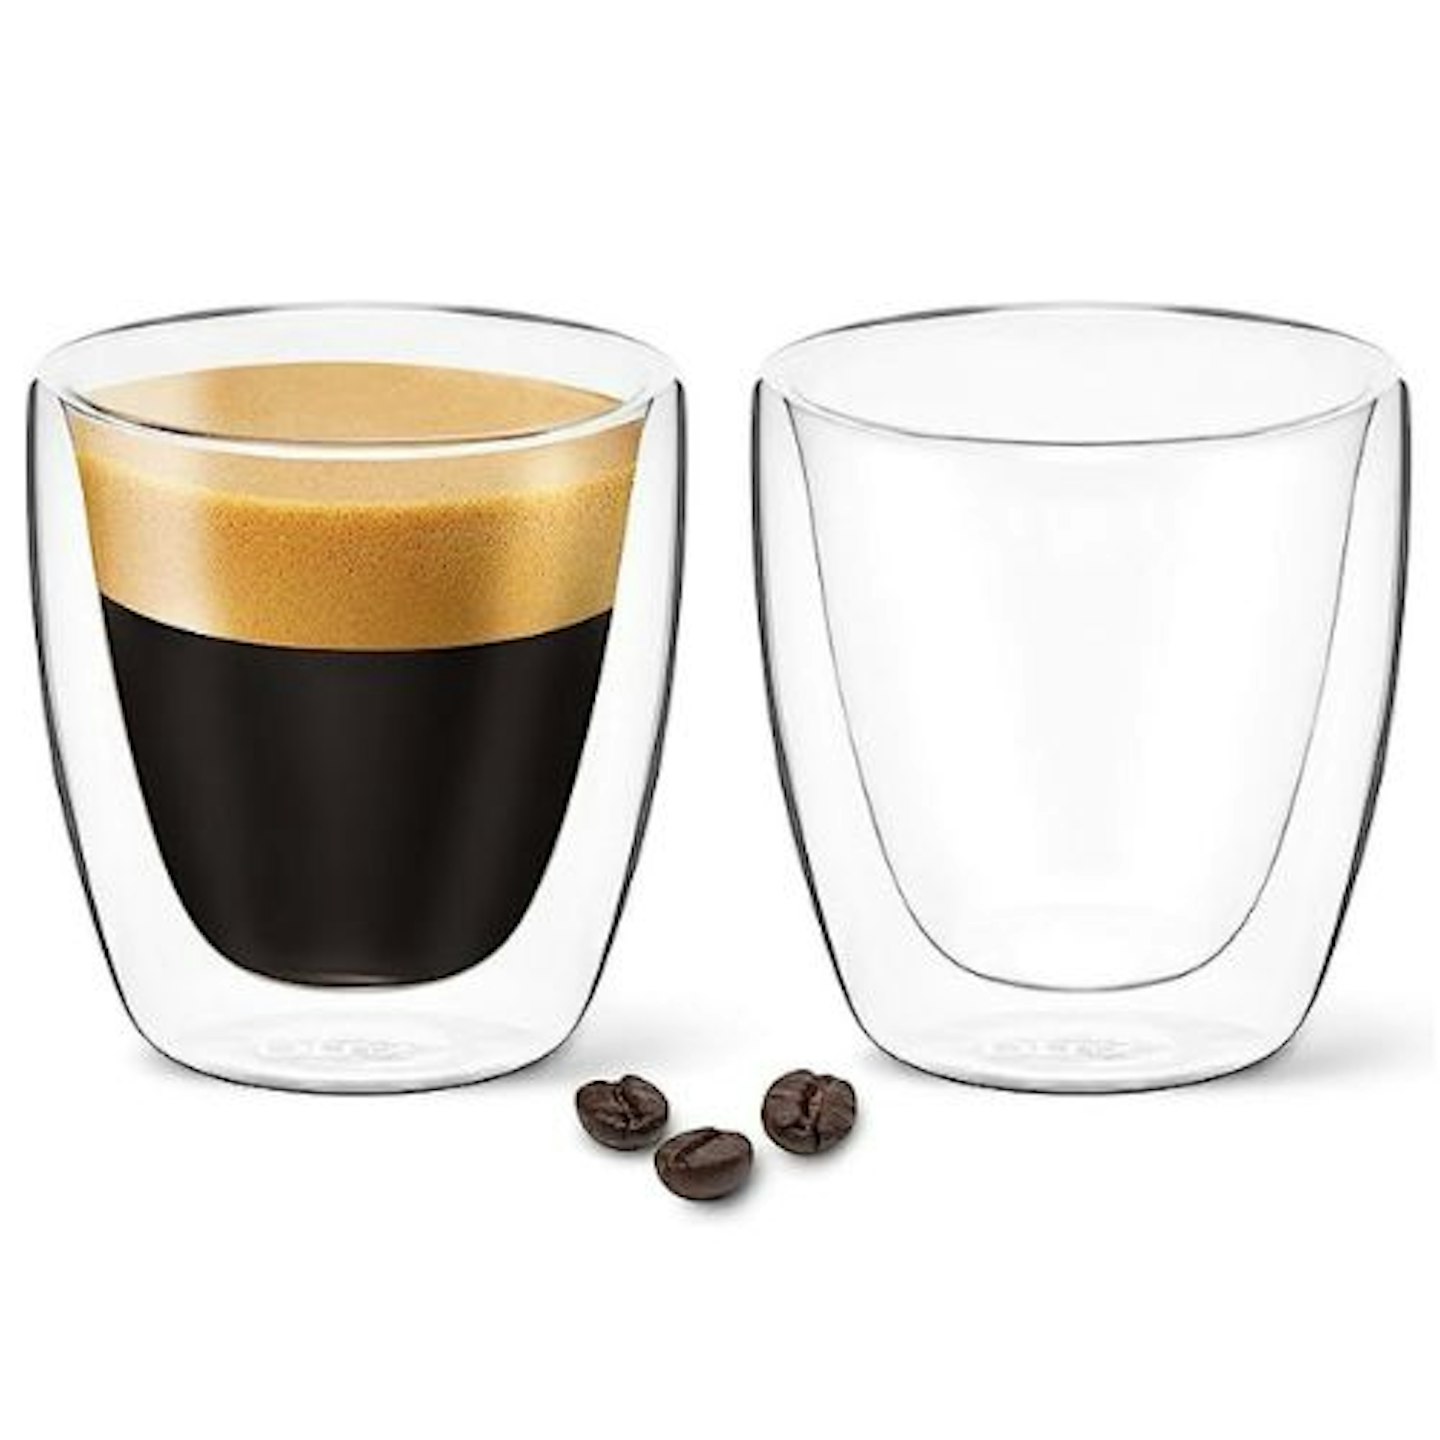 https://images.bauerhosting.com/affiliates/sites/10/2023/04/DLux-Espresso-Coffee-Cups-80ml.jpg?auto=format&w=1440&q=80